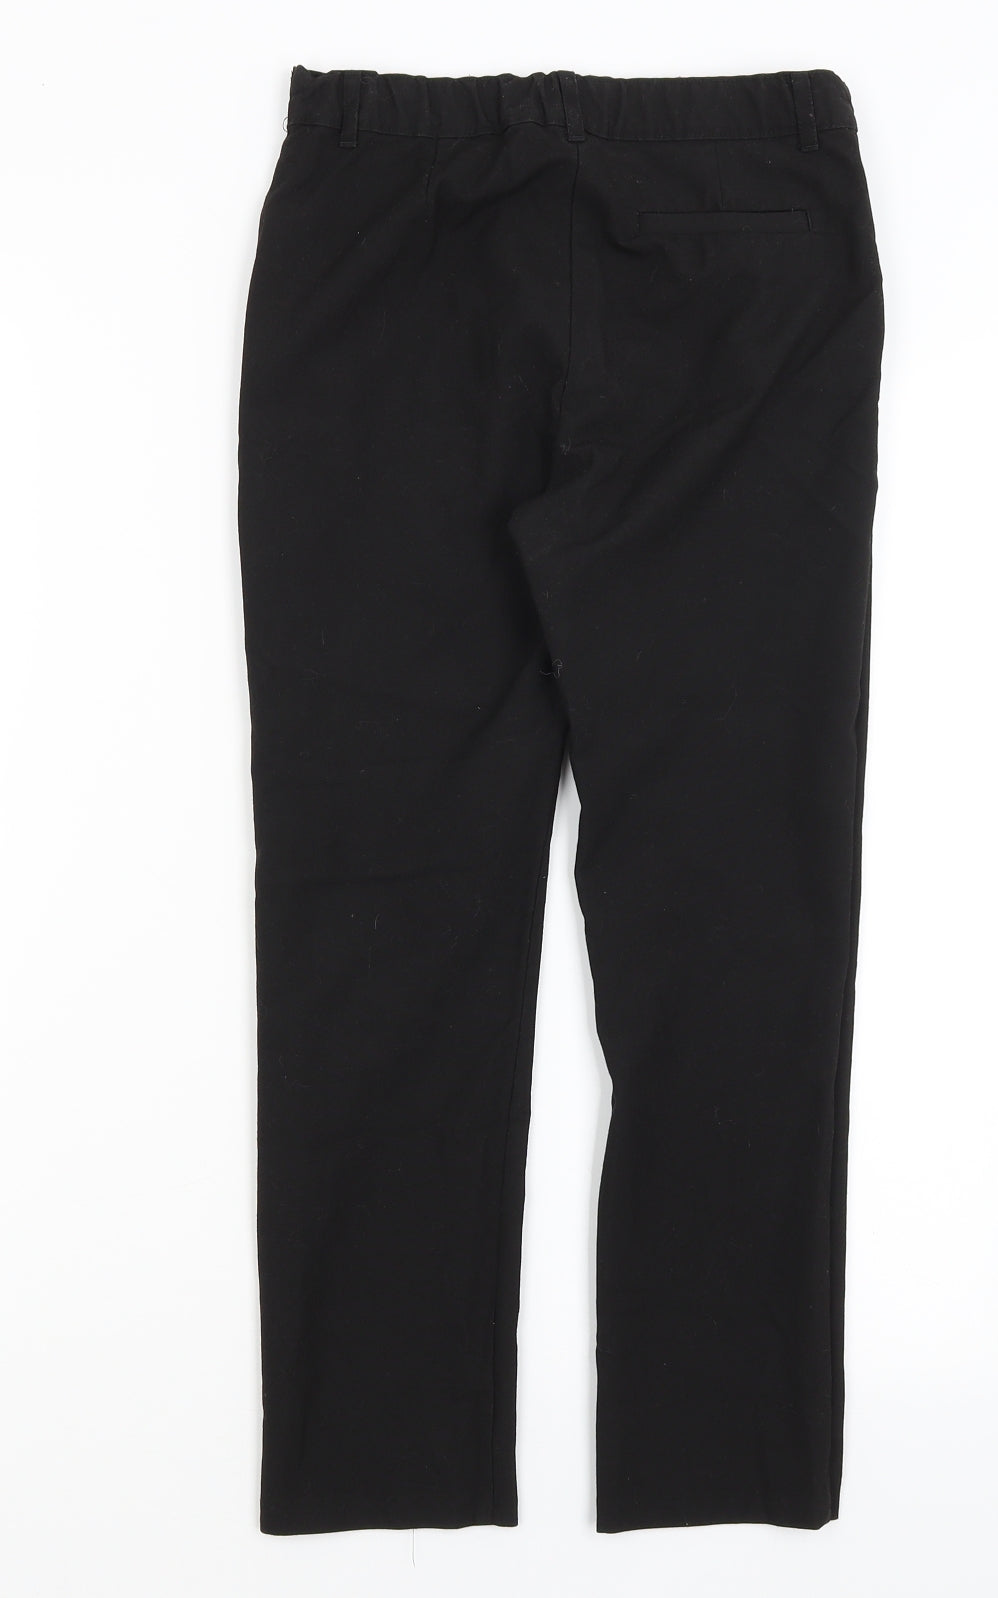 F&F Boys Black   Dress Pants Trousers Size 9-10 Years